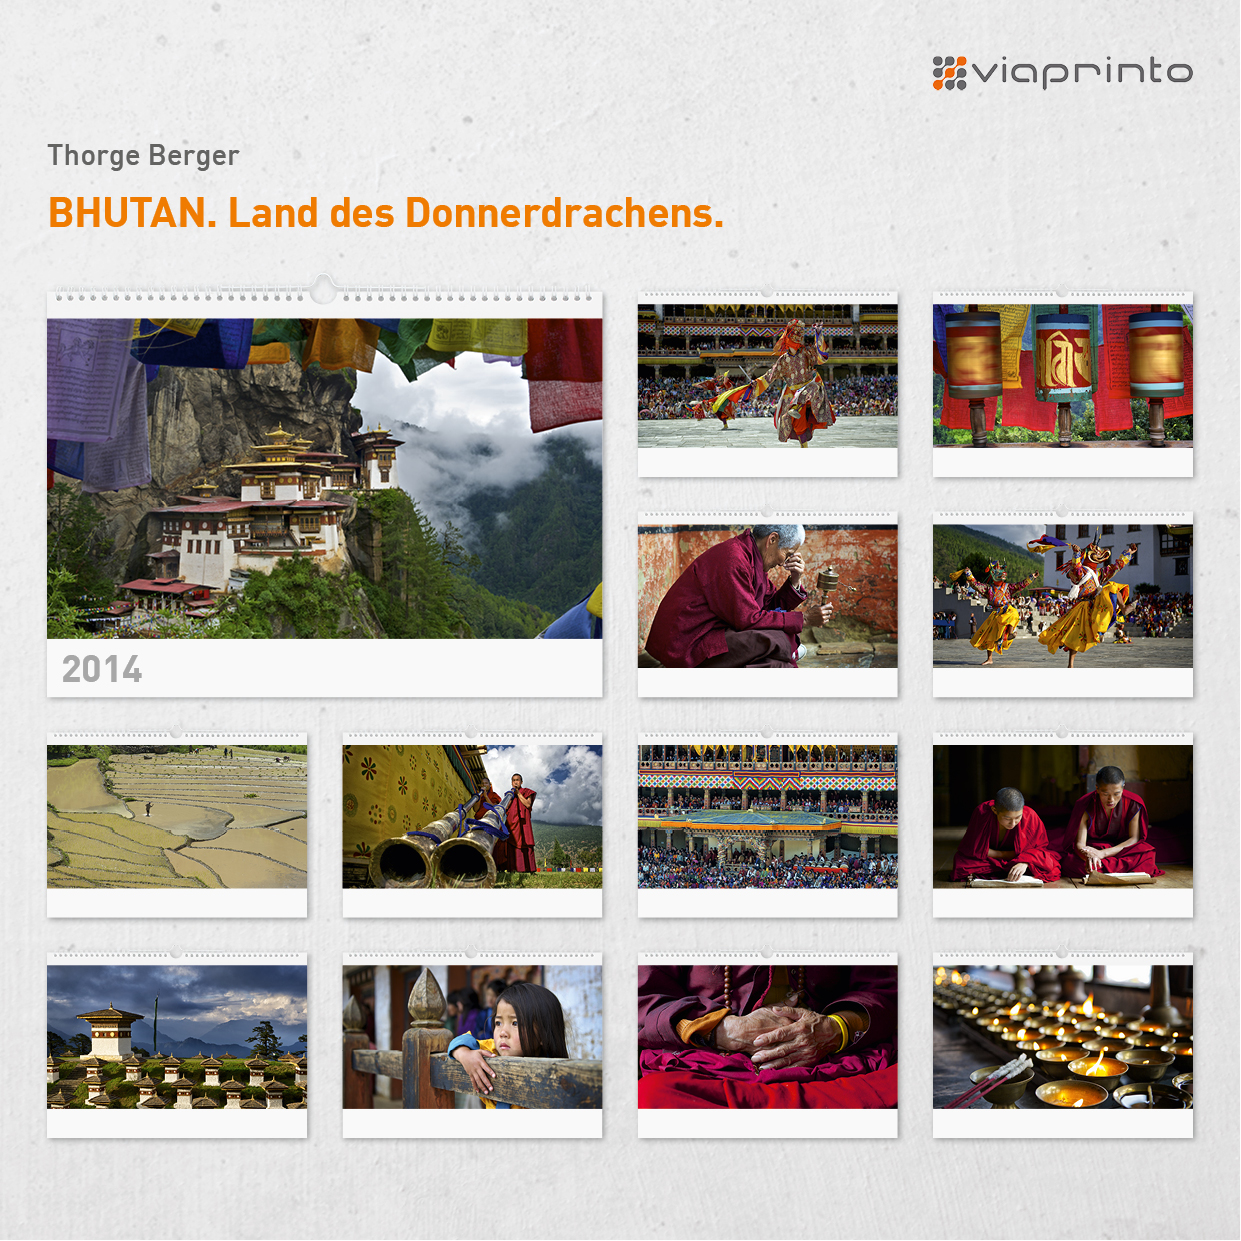 Thorge Berger - Motivkalender "Bhutan. Land des Donnerdrachens"